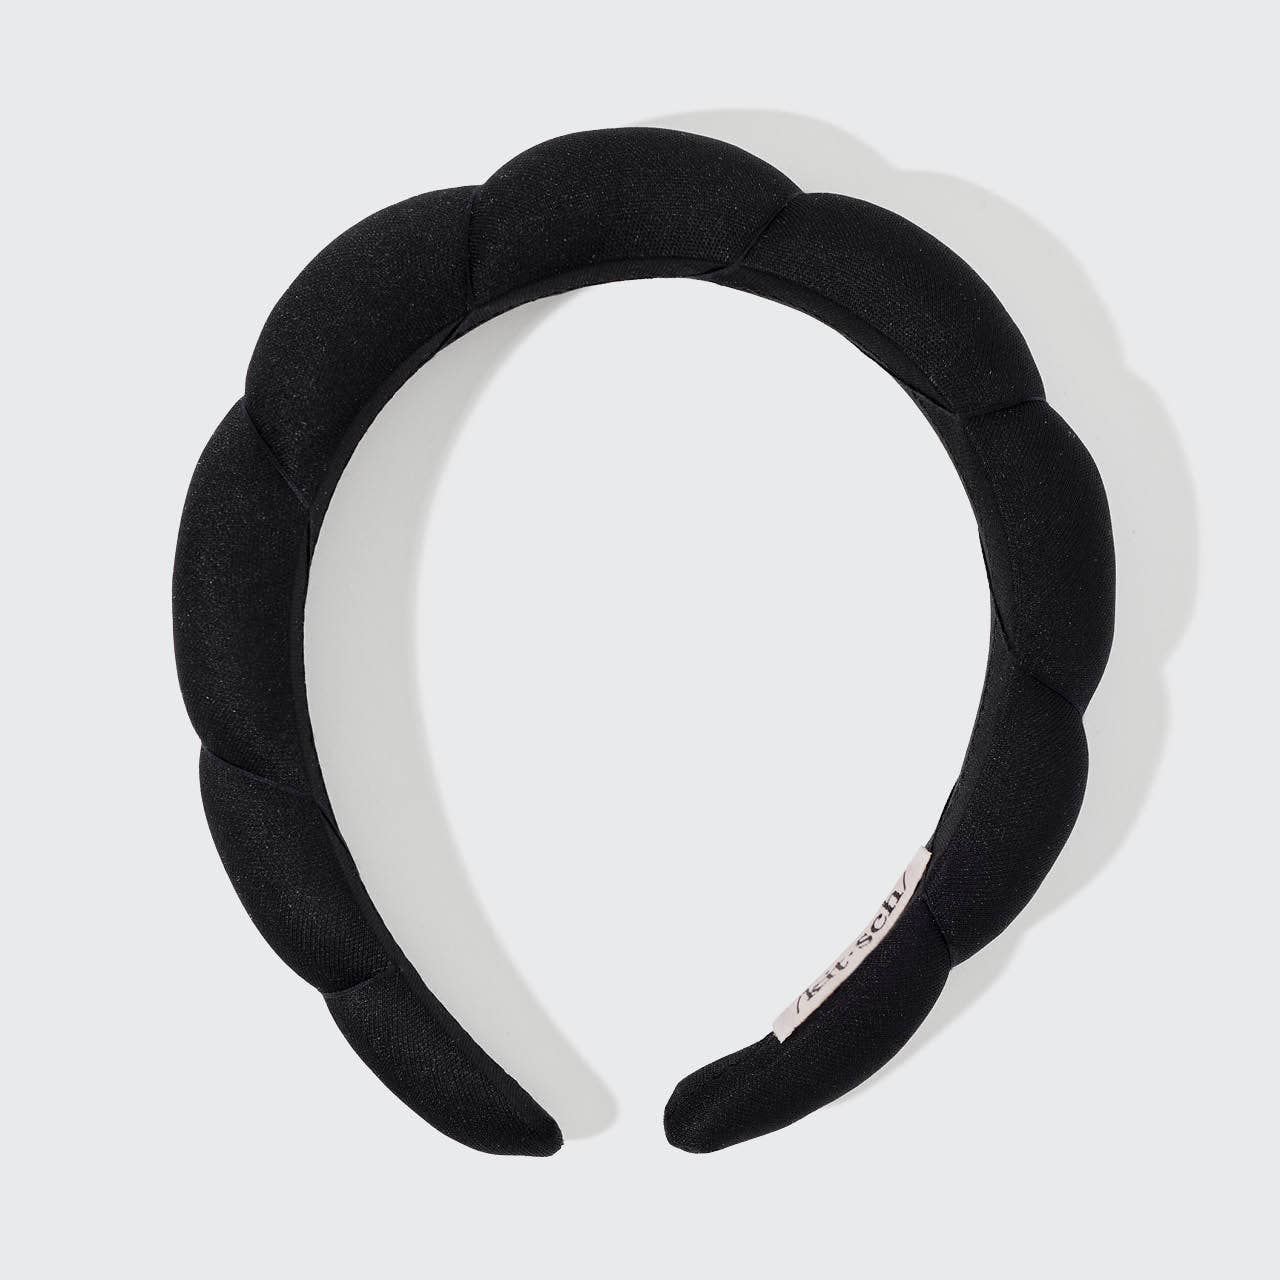 Kitsch- Recycled Fabric Puffy Headband 1pc- Black